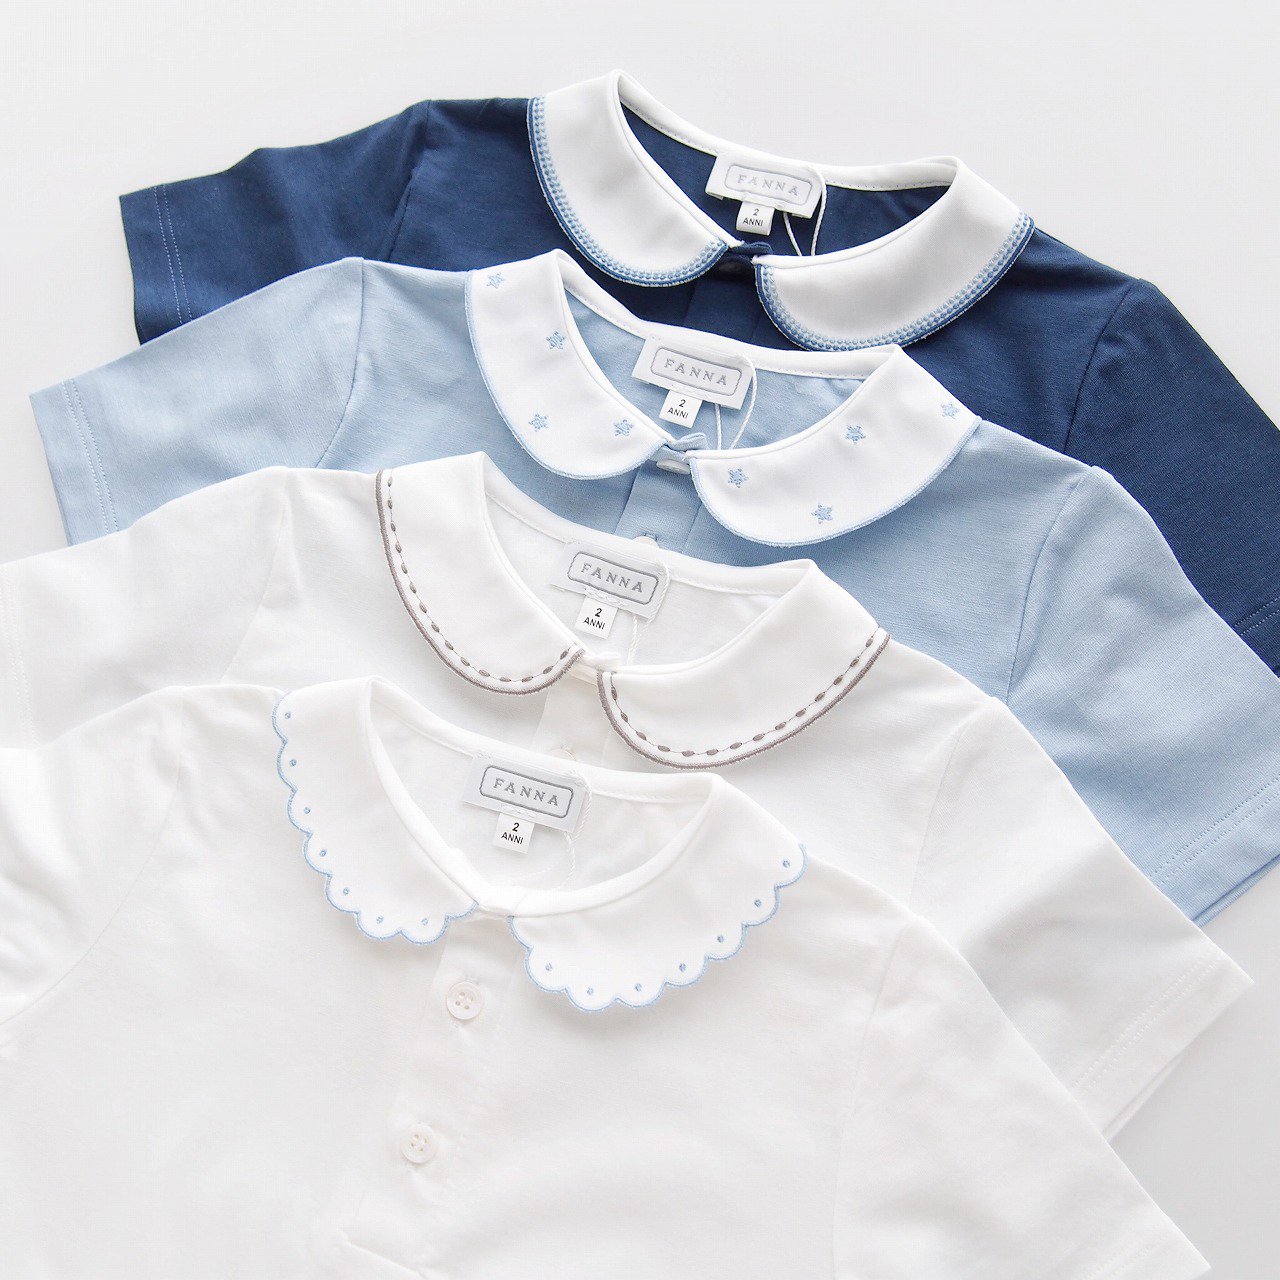 10% - Nicoletta Fanna - Embroidery boy's tops (Navy/Greige)